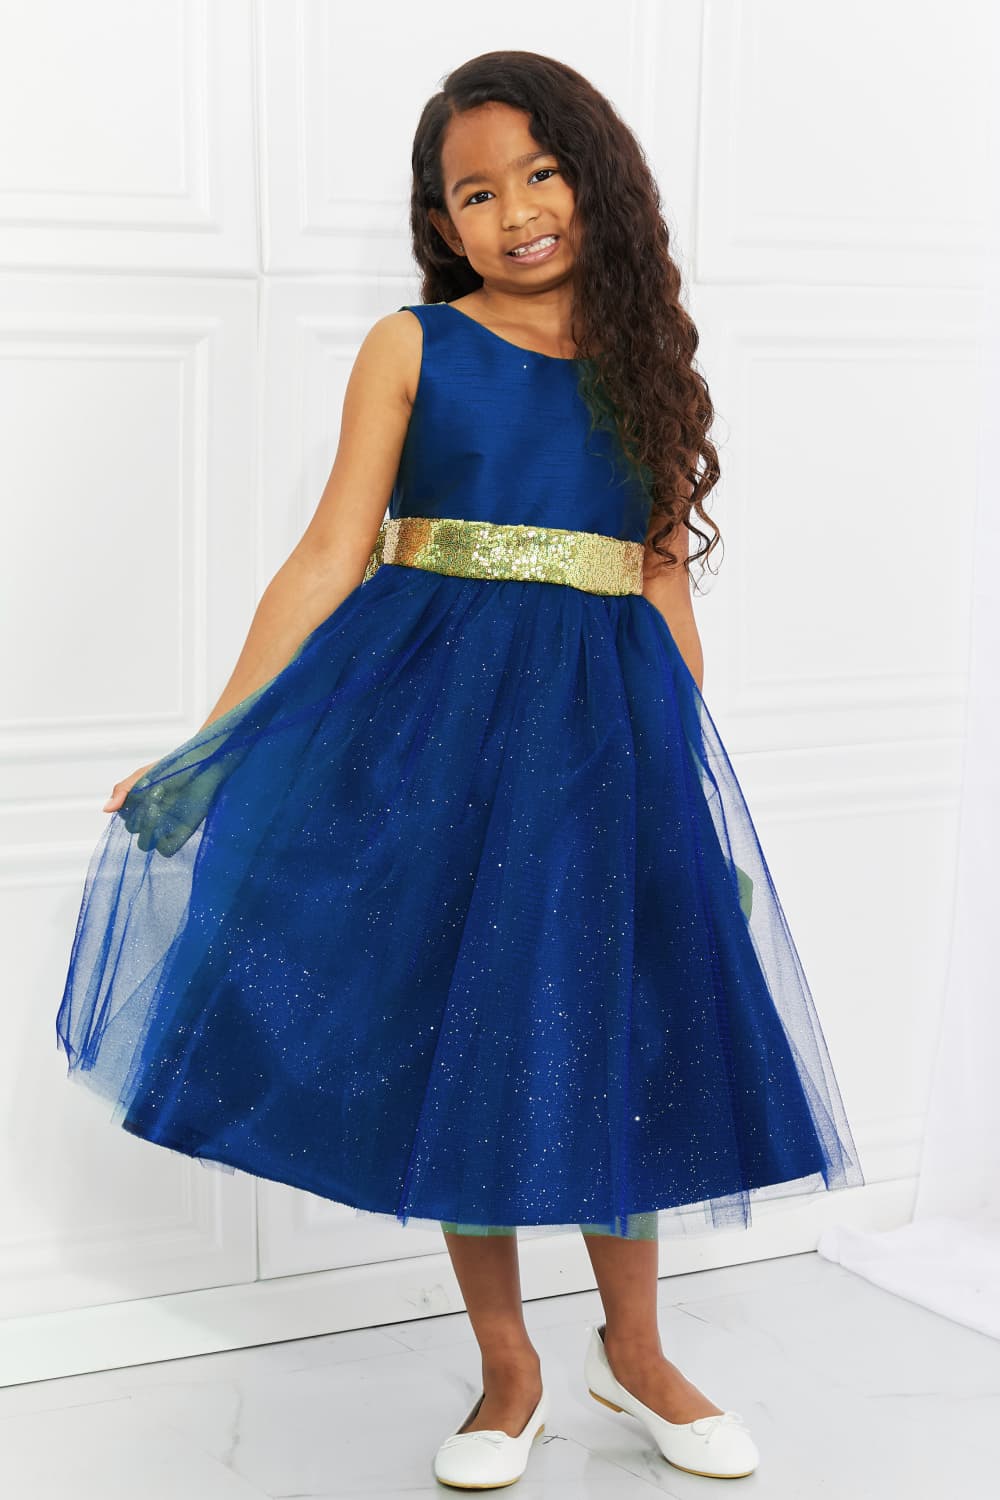 Kid's Dream Little Miss Classy Tutu Dress in Blue | - CHANELIA